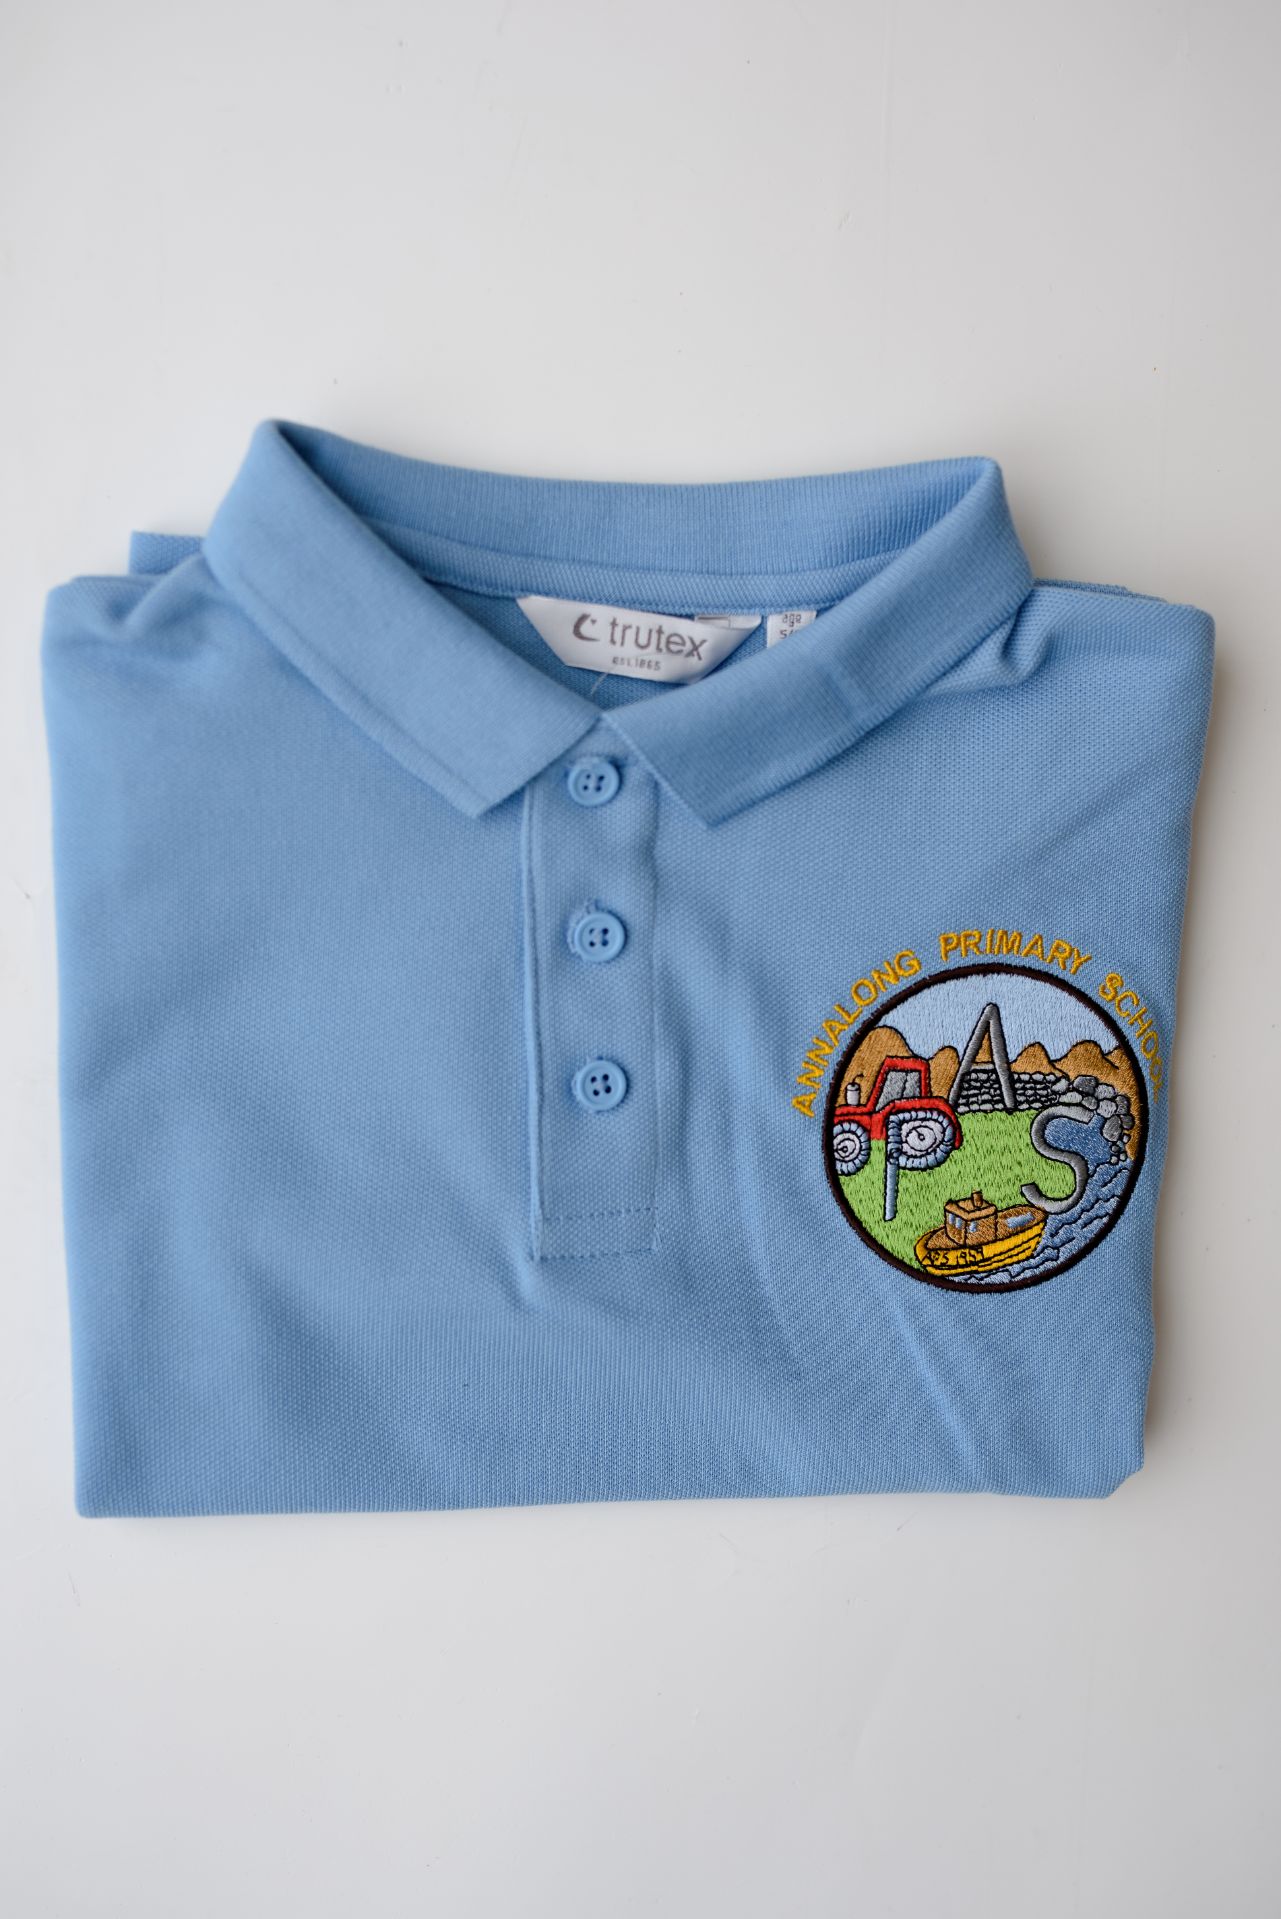 Annalong Primary School Trutex Blue Polo Shirt